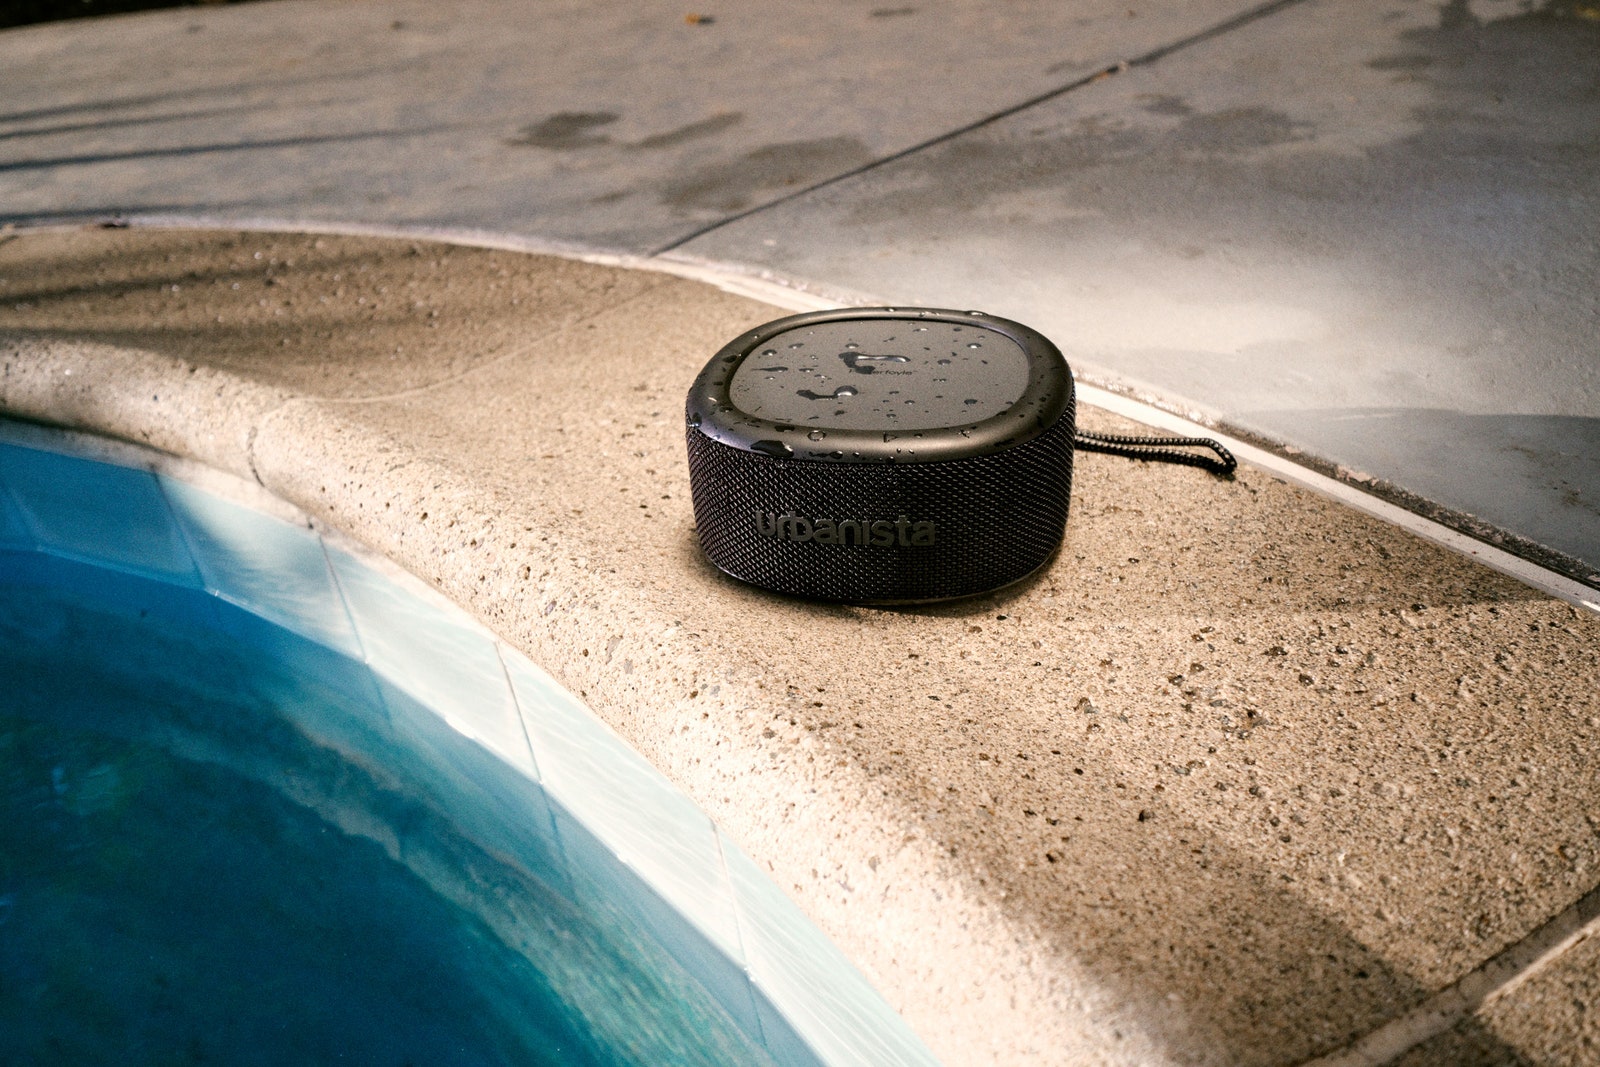 midnight black speaker near pool and wet